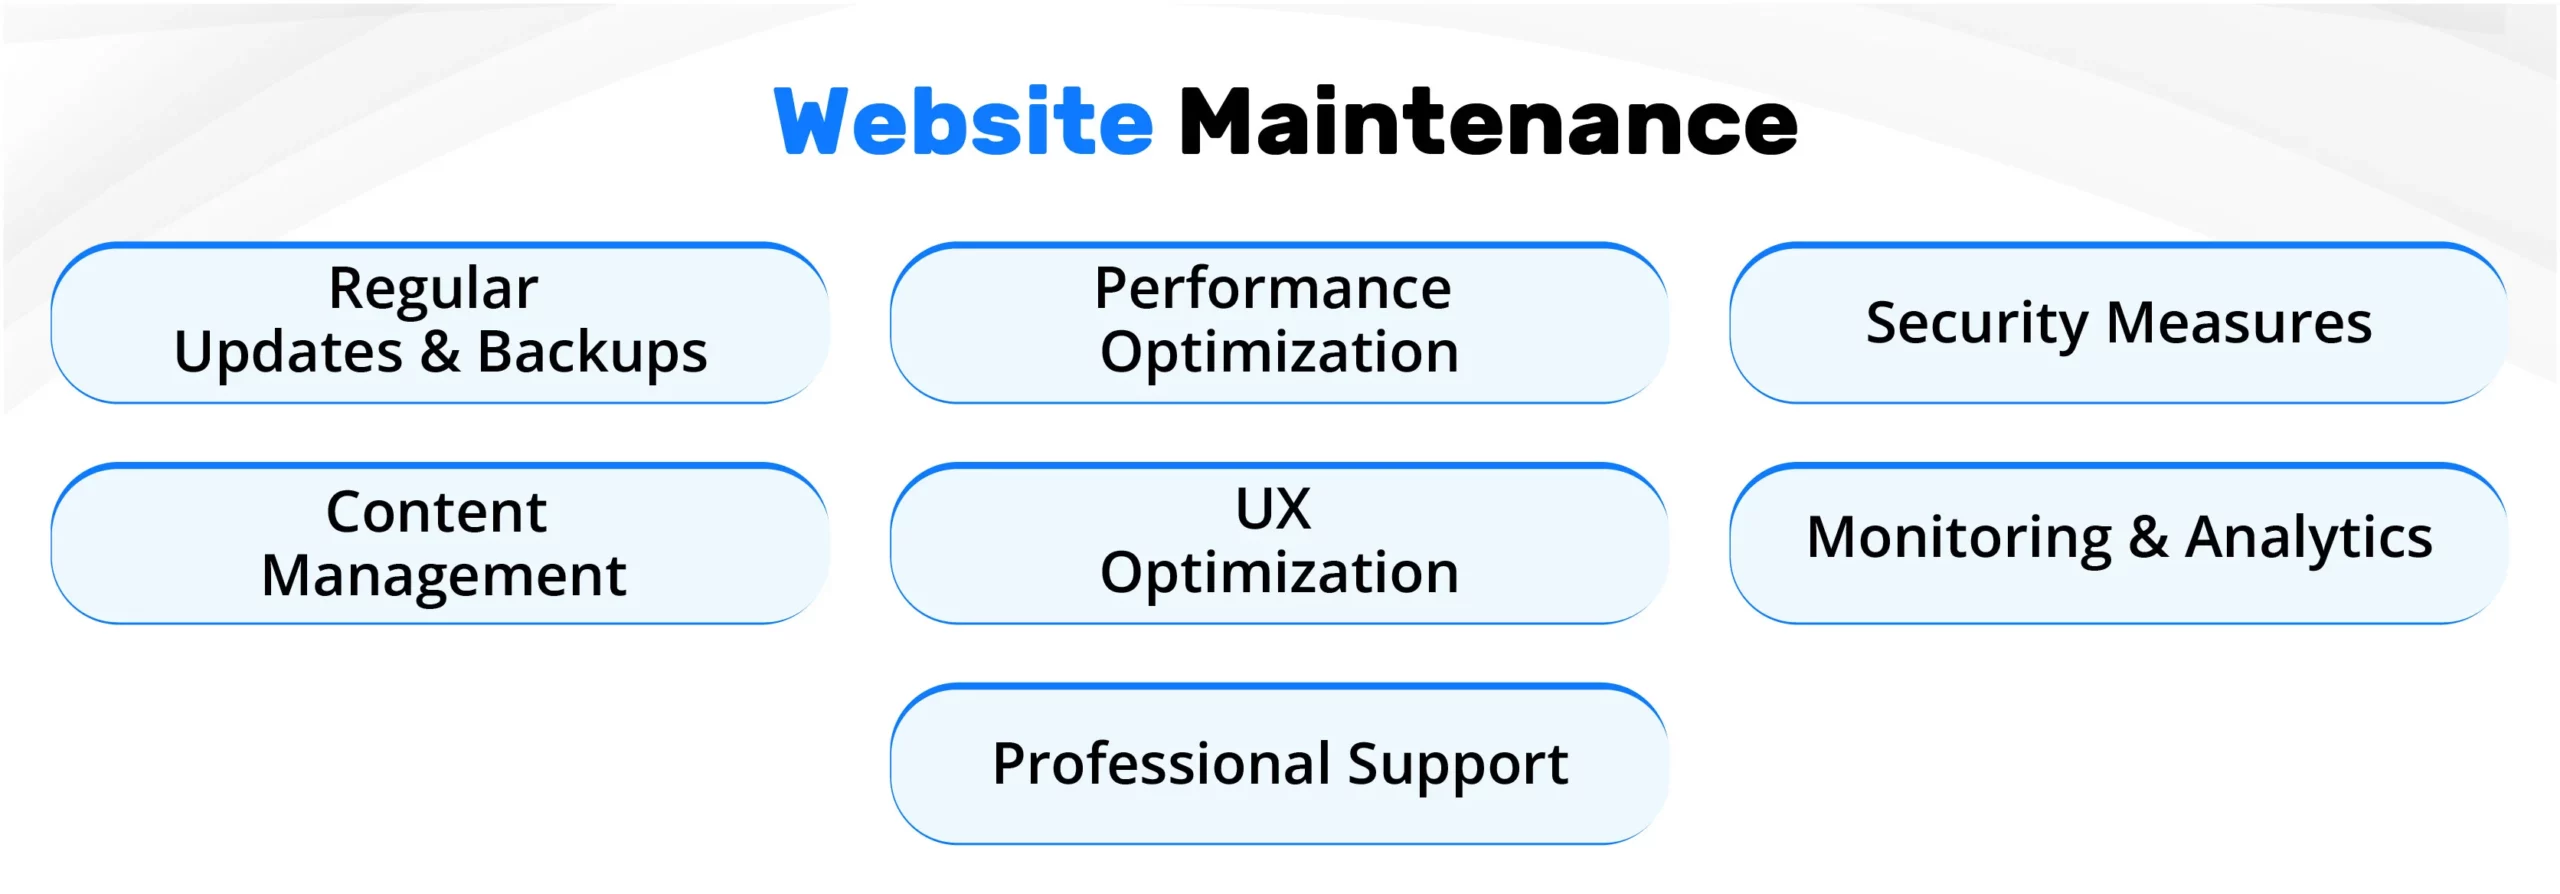 Best Practices for Website Maintenance 